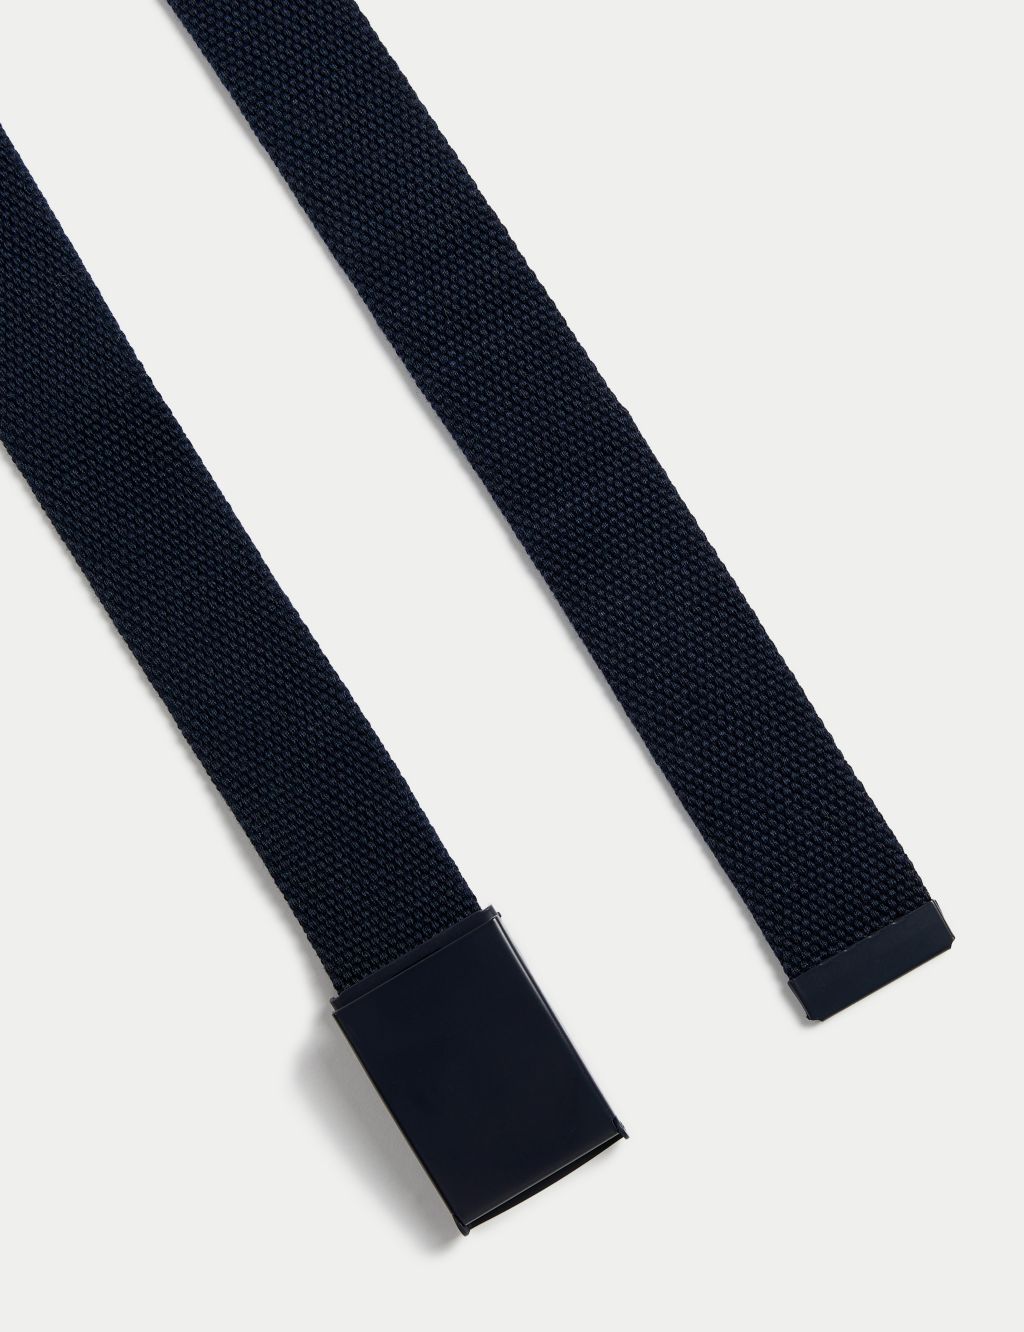 Textured Belt image 2